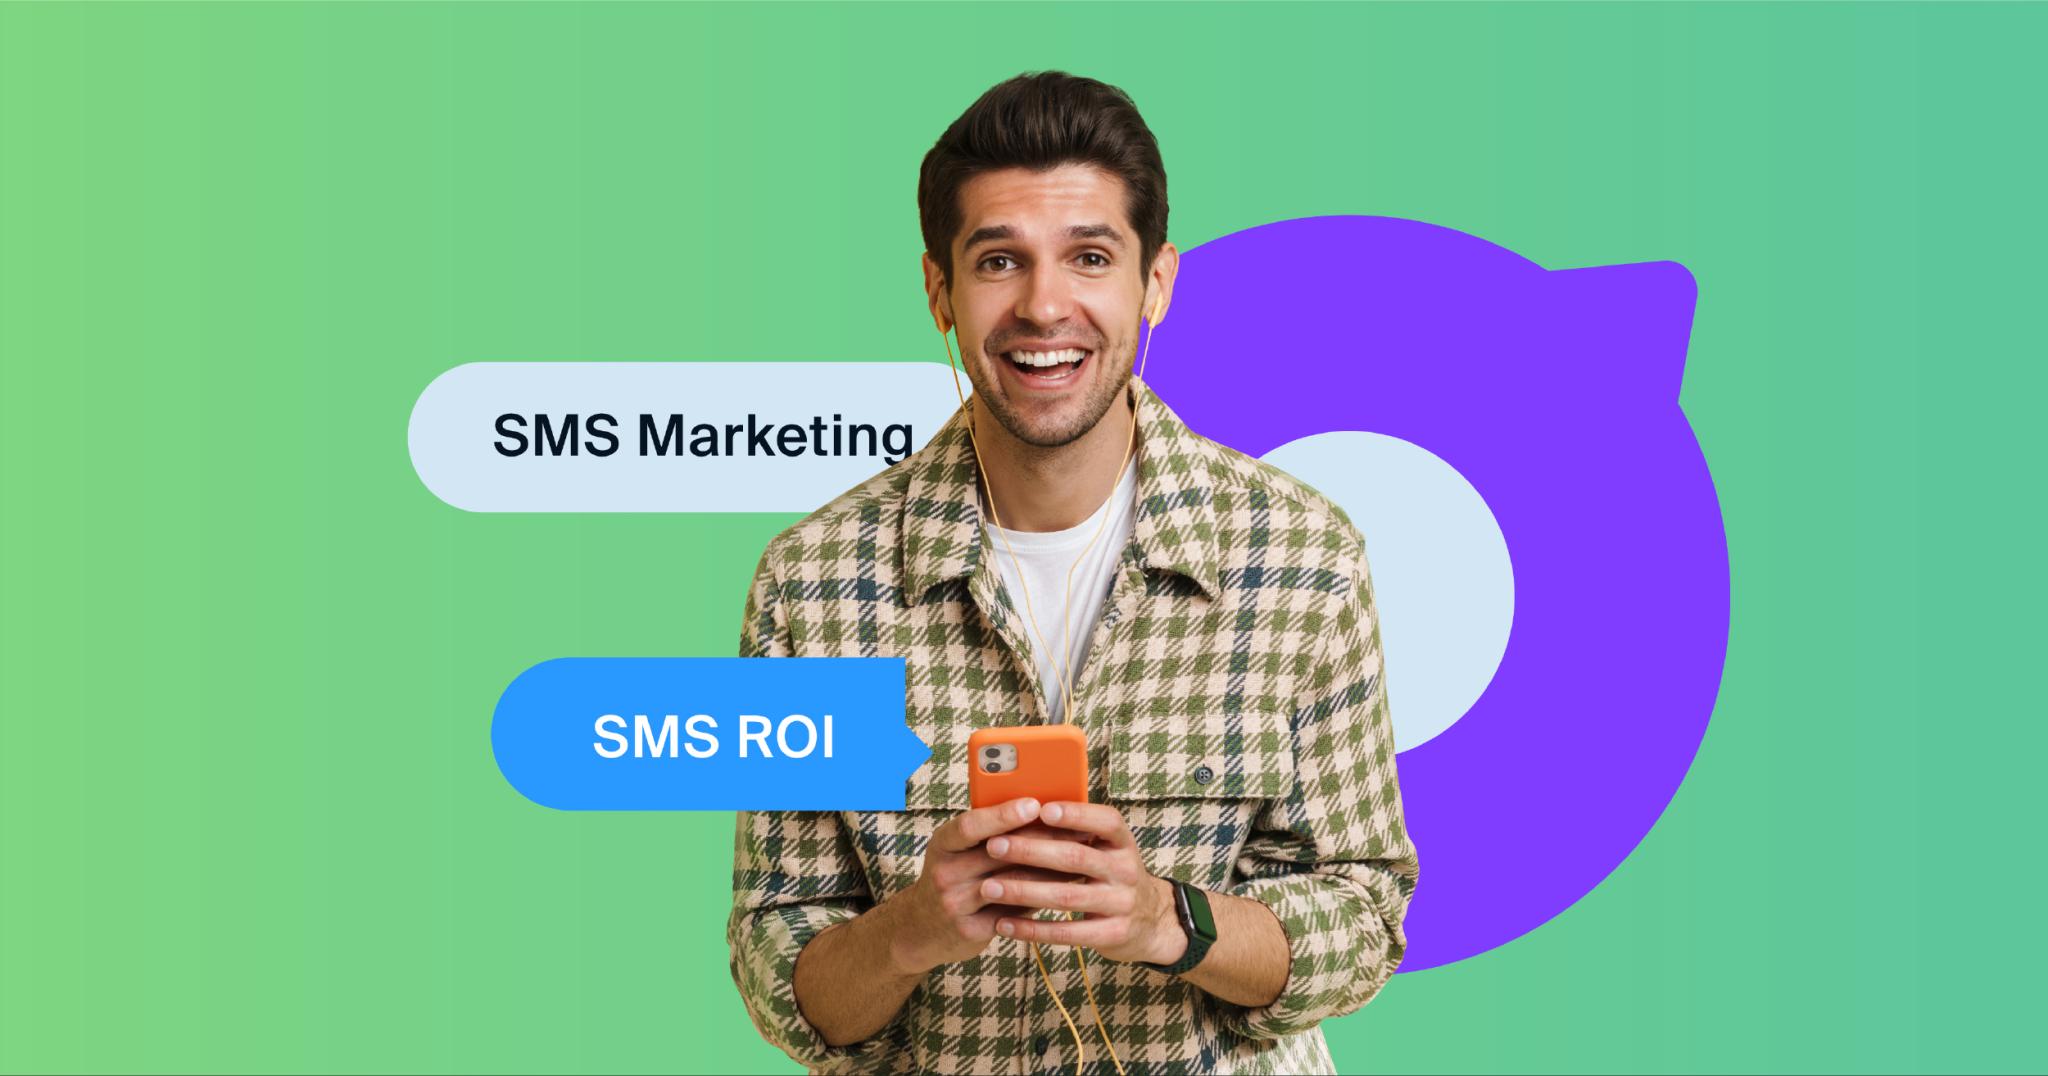 SMS Marketing ROI